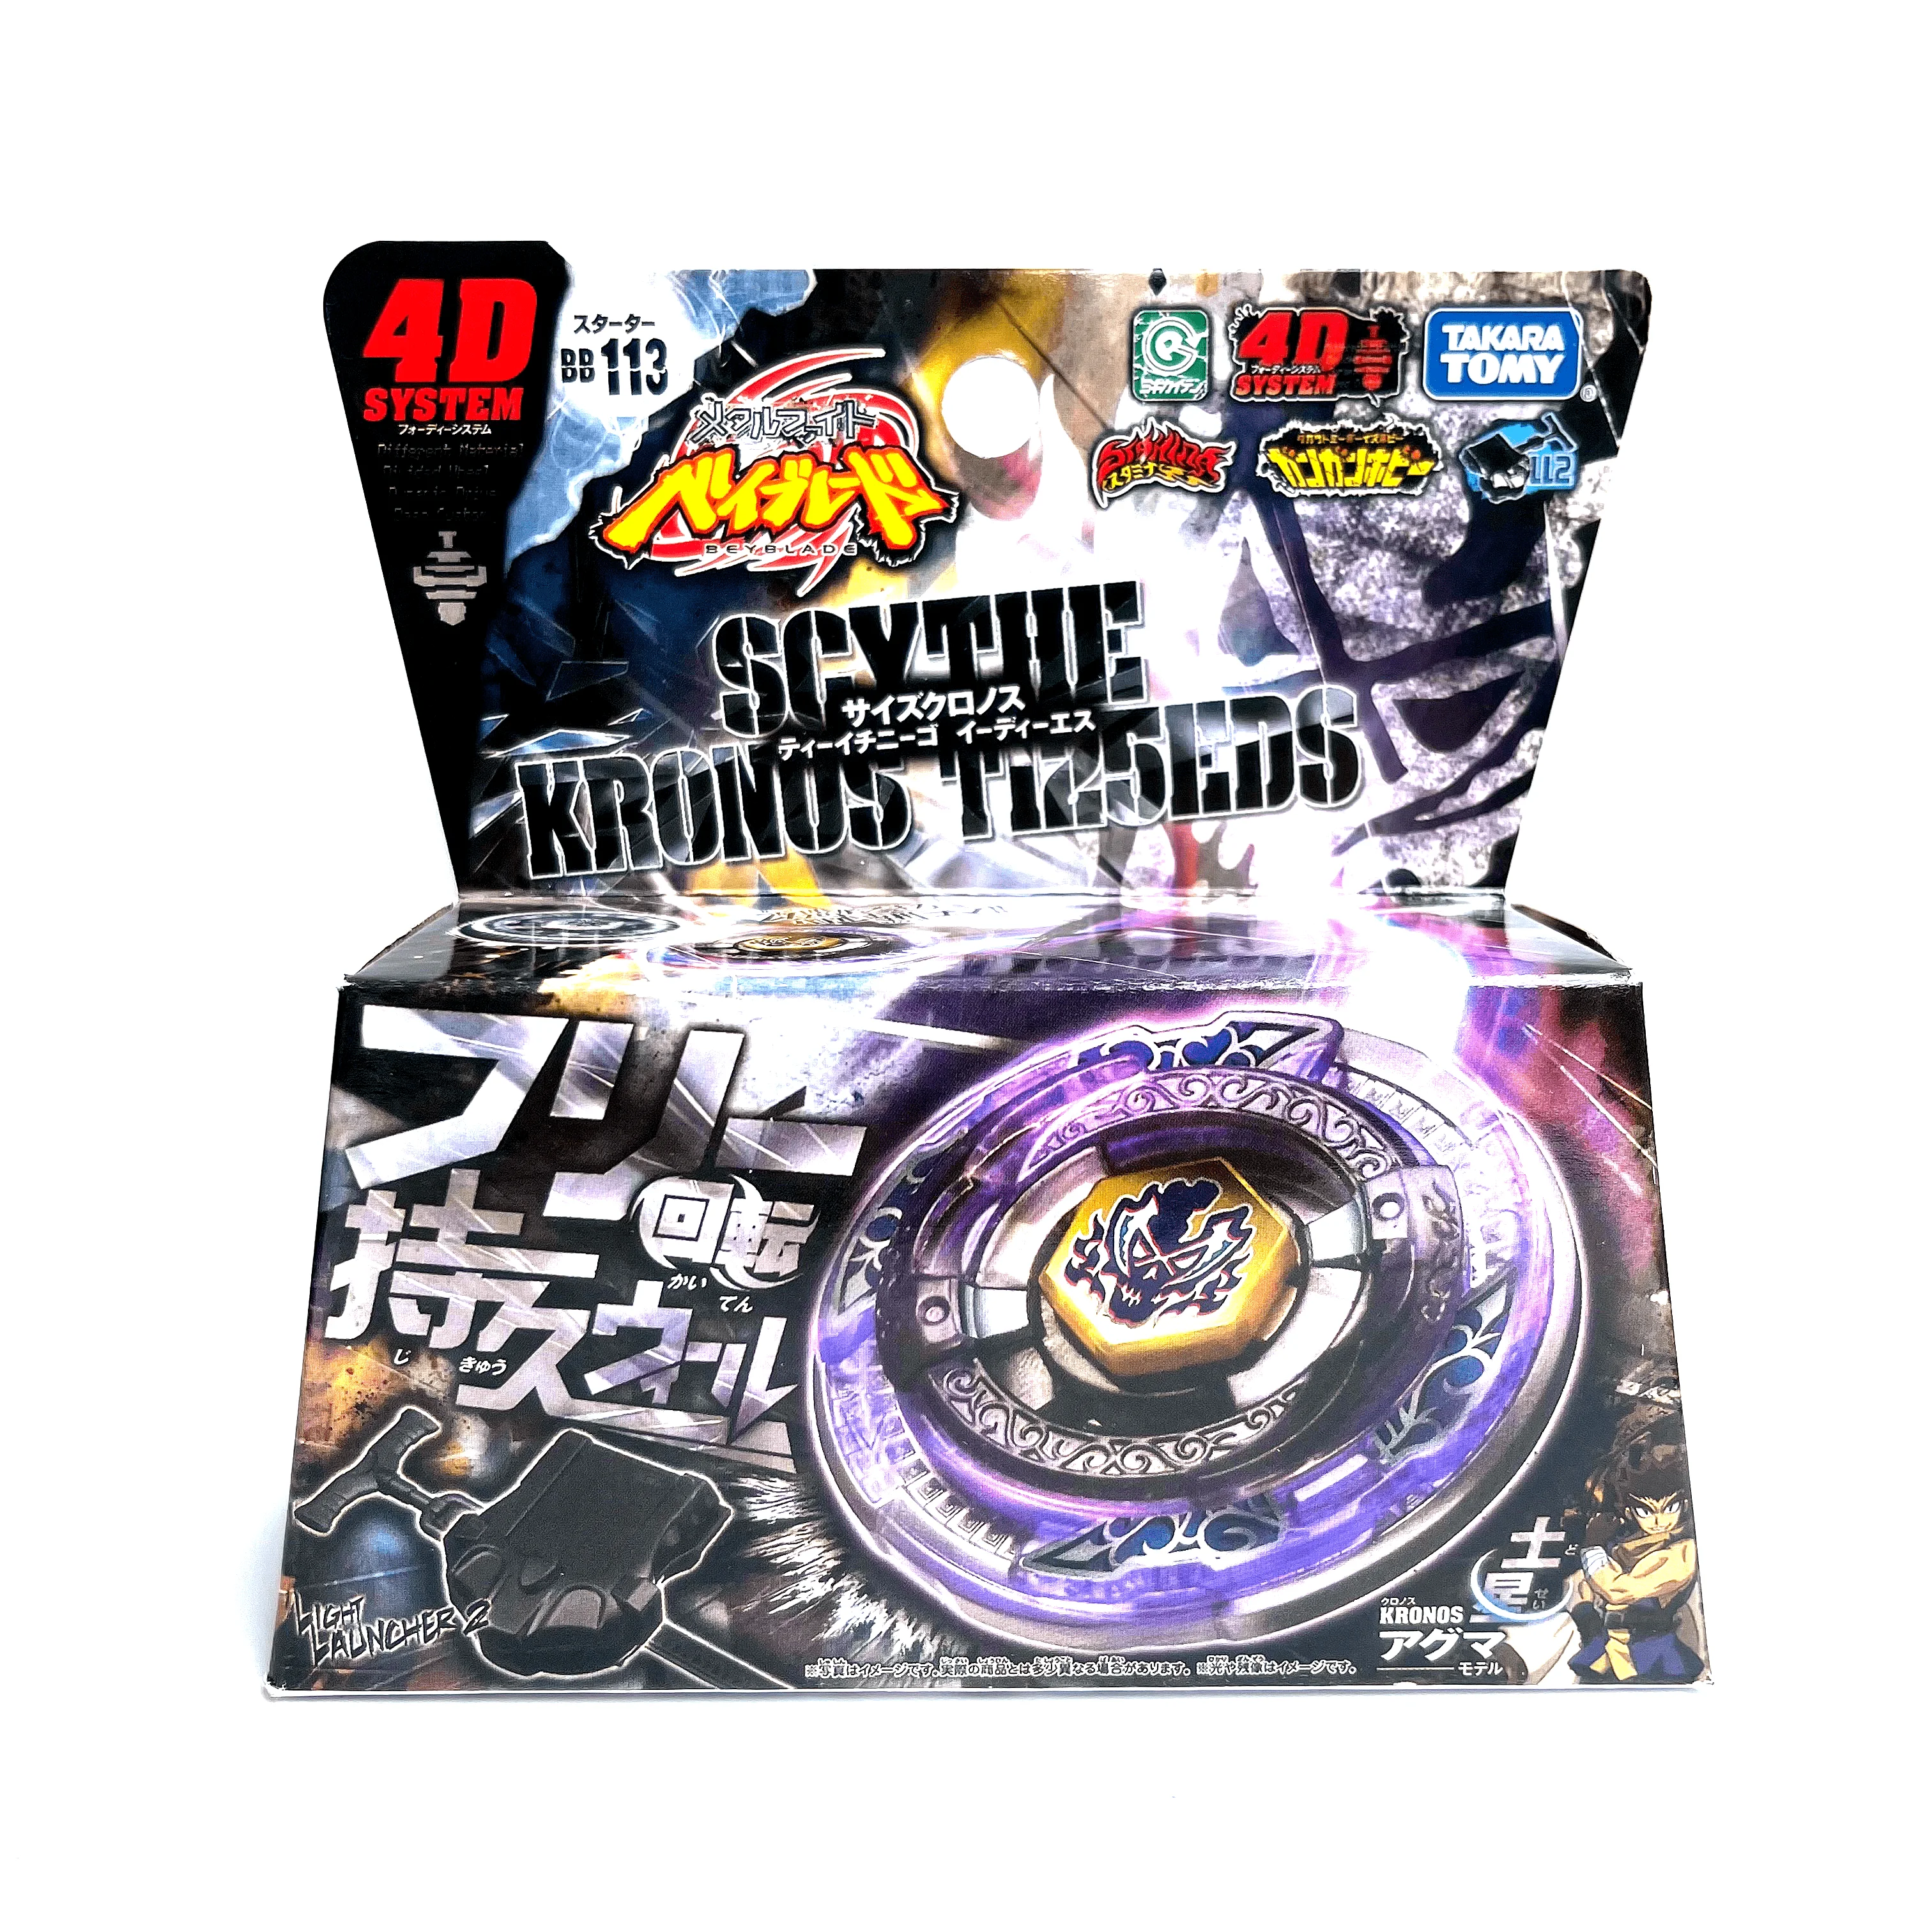 Takara Tomy Beyblade Burst BB113 Scythe Kronos Booster Metal Fusion Spin... - $20.32